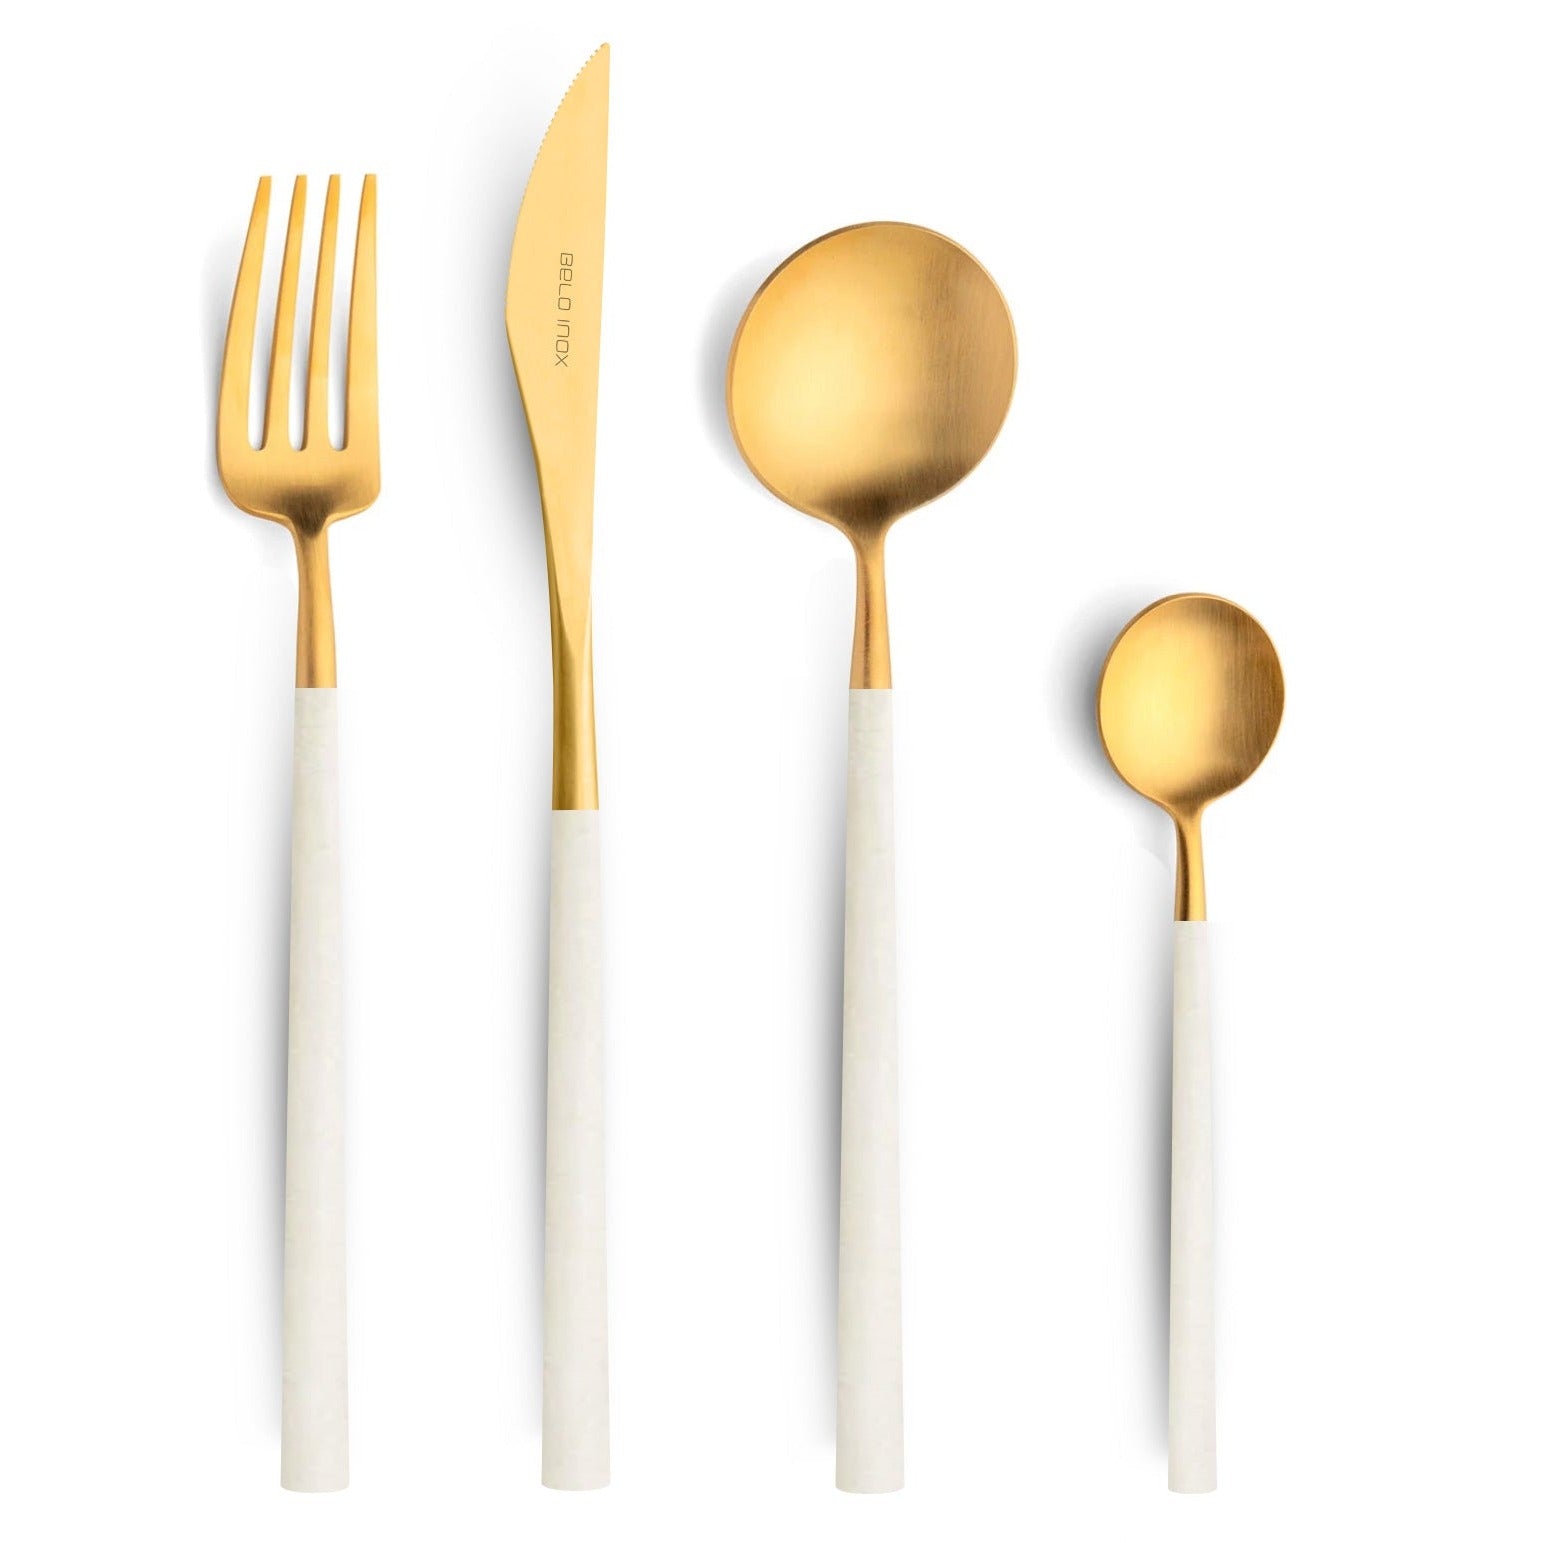 Neo Classic White • Gold Plastic Cutlery Set